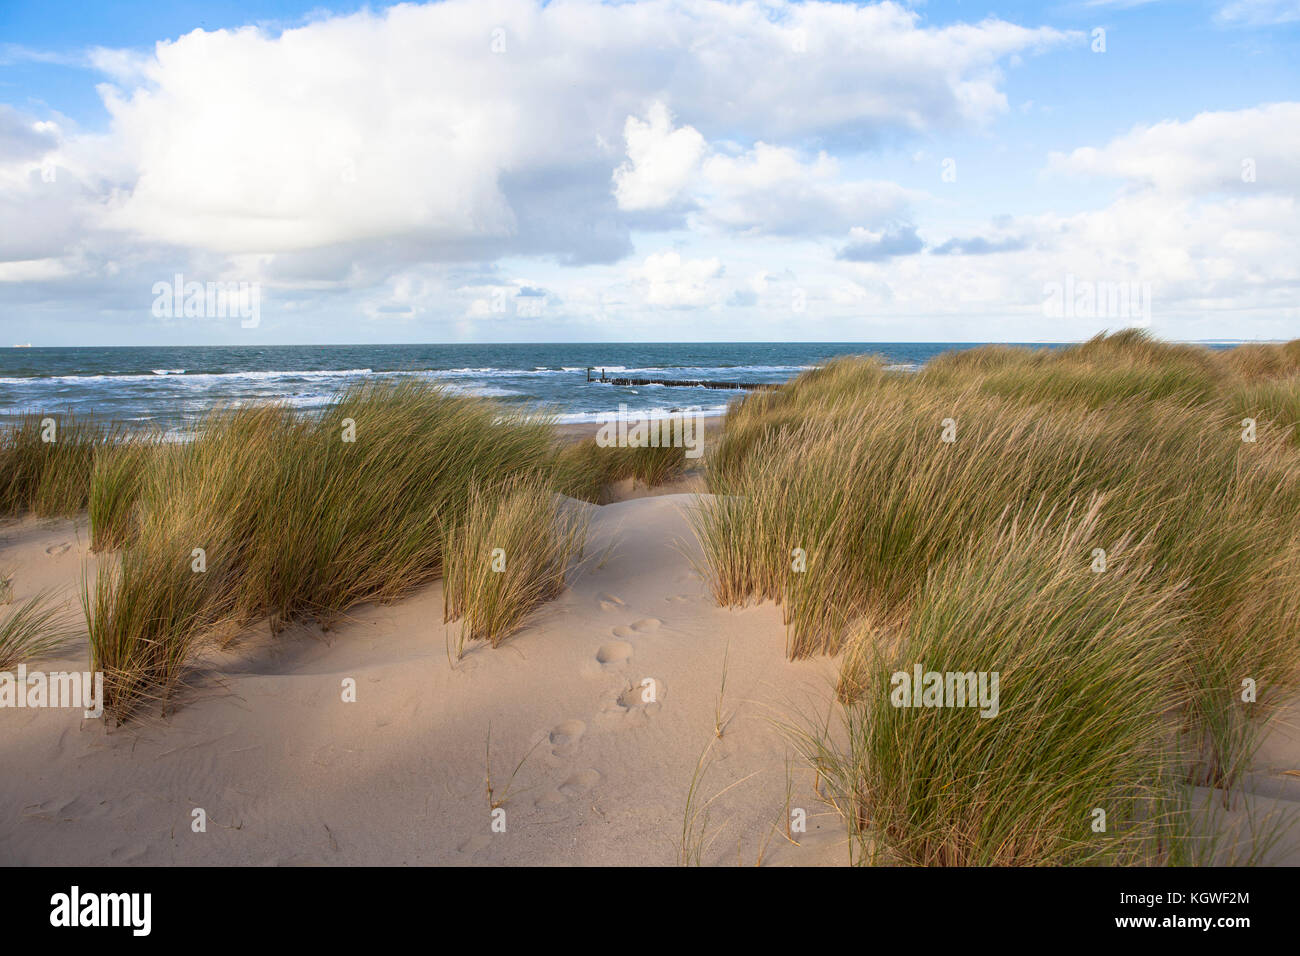 Paesi Bassi, Zeeland, sabbia-sporgenza alla spiaggia di Oostkapelle sulla penisola di Walcheren. Niederslande, Zeeland, Strandhafer bei Oostkapelle auf Walche Foto Stock